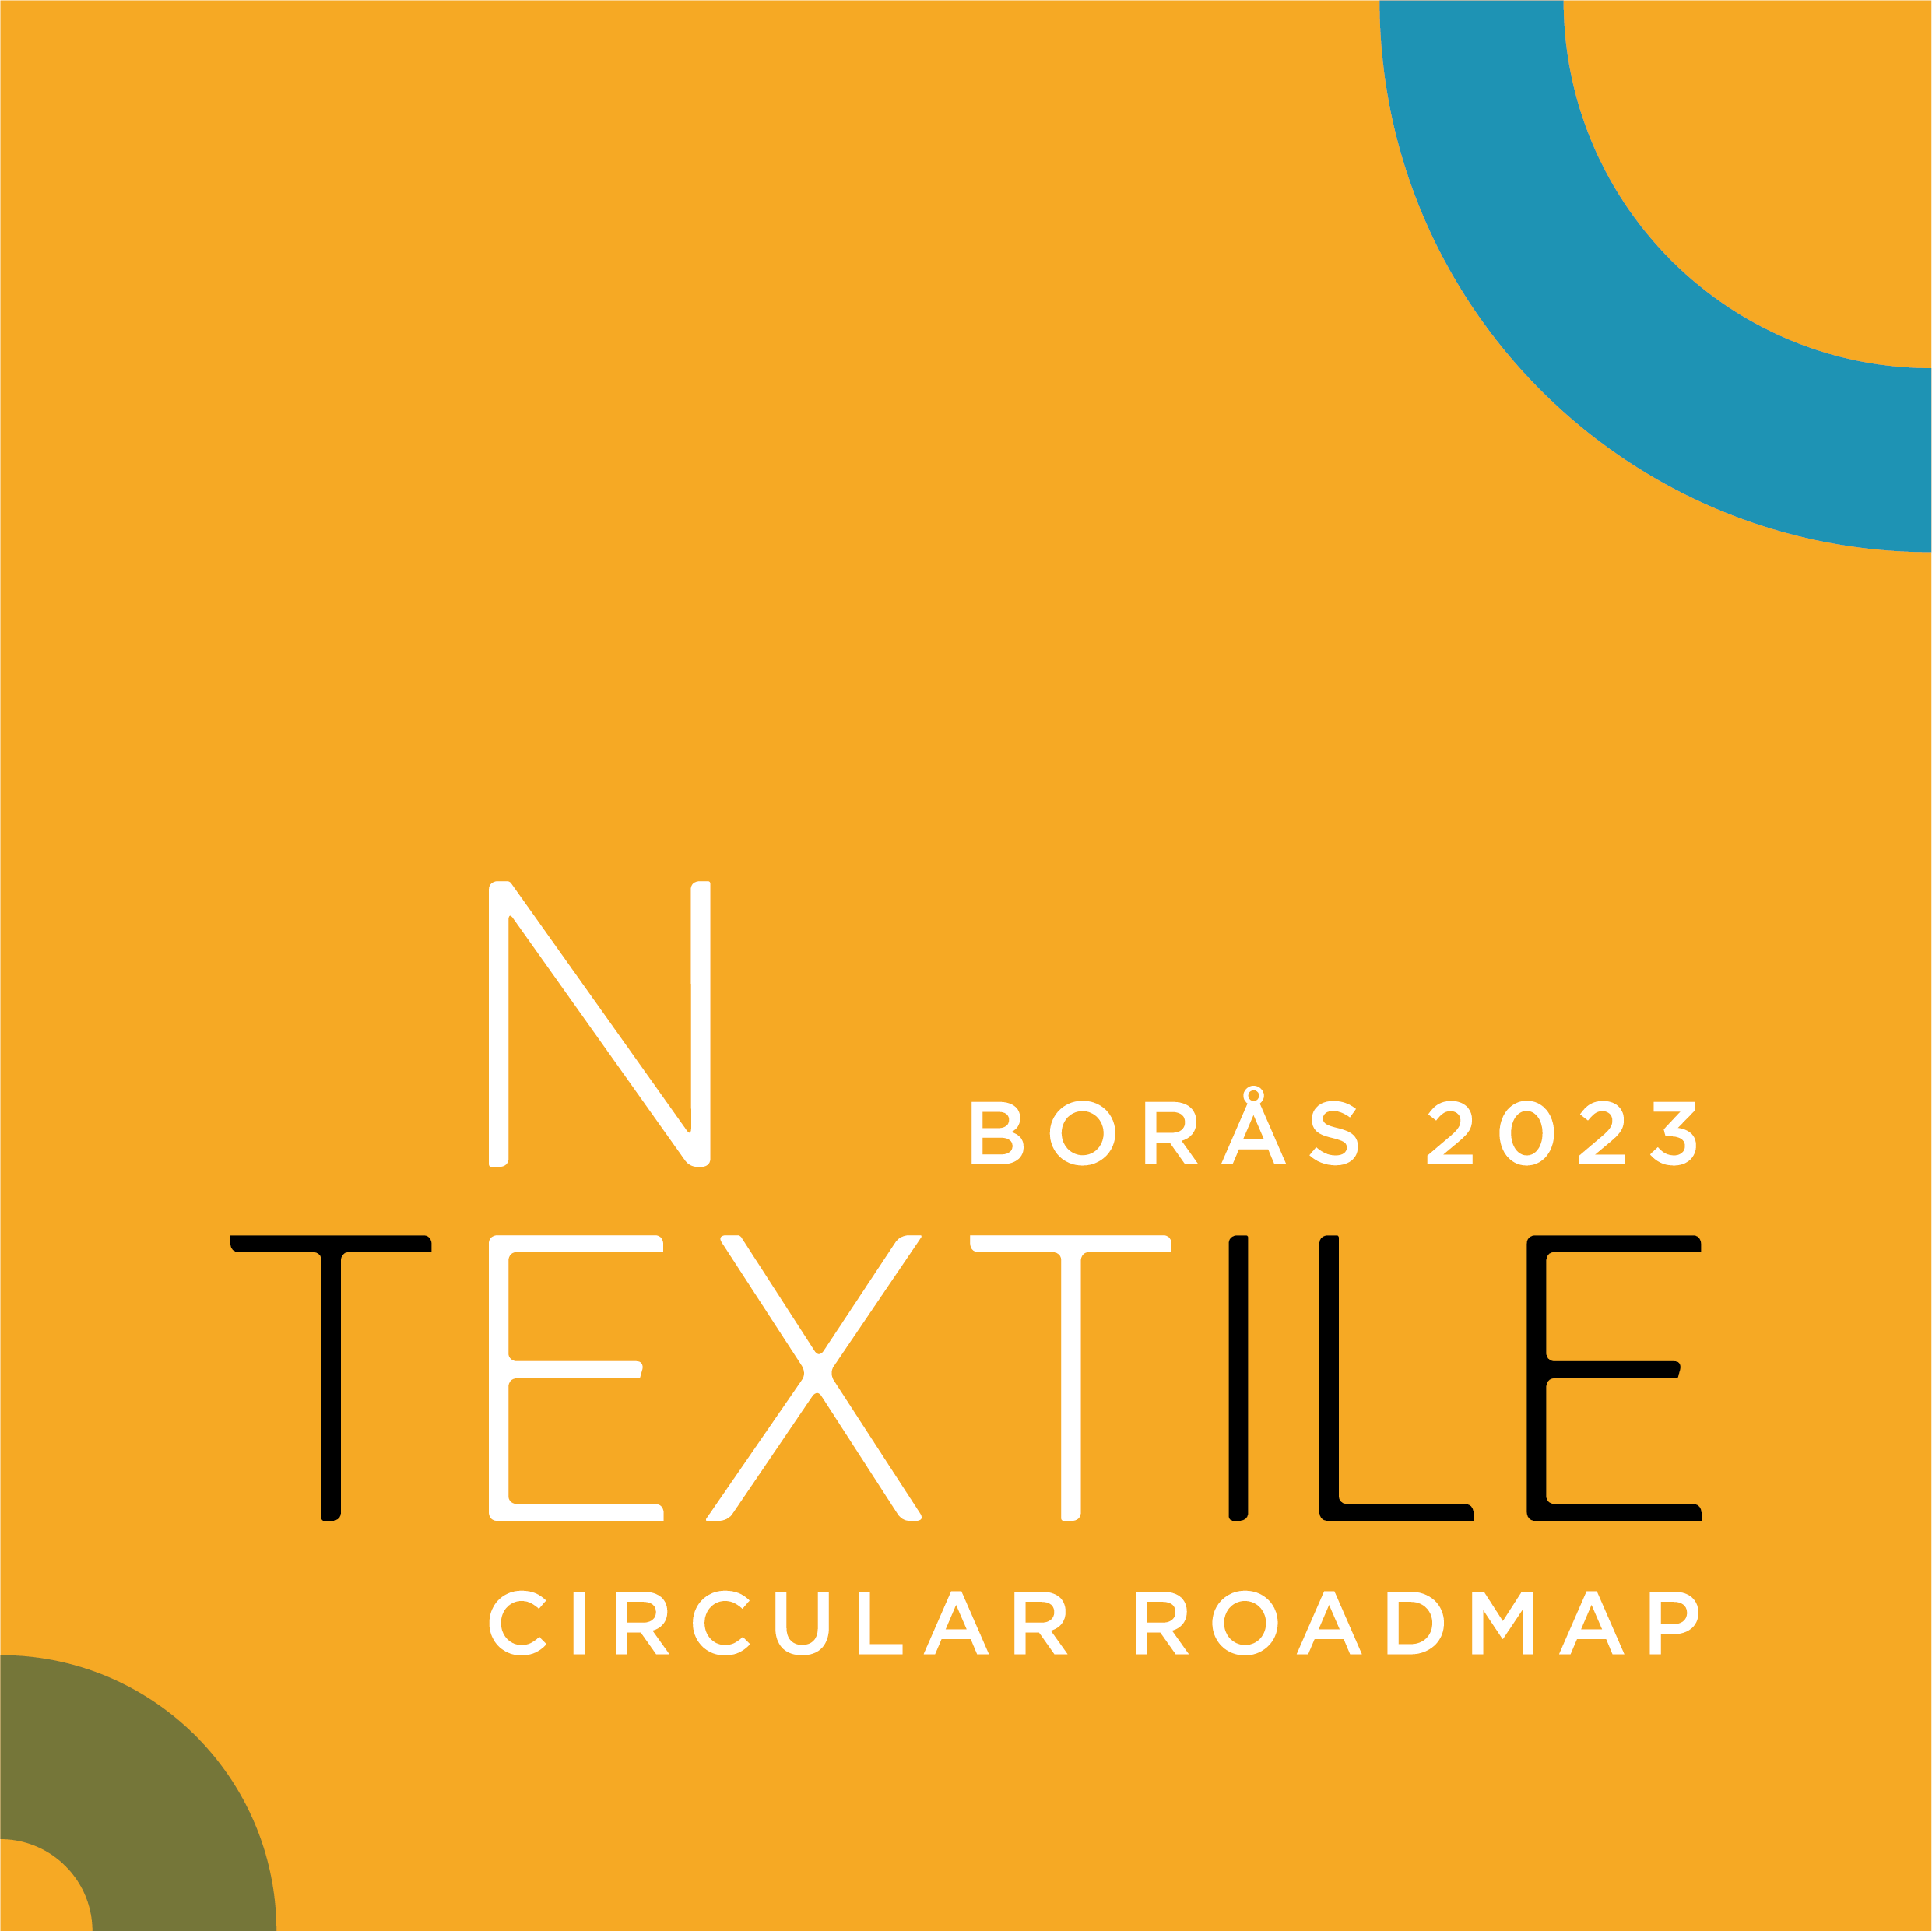 Next Textile